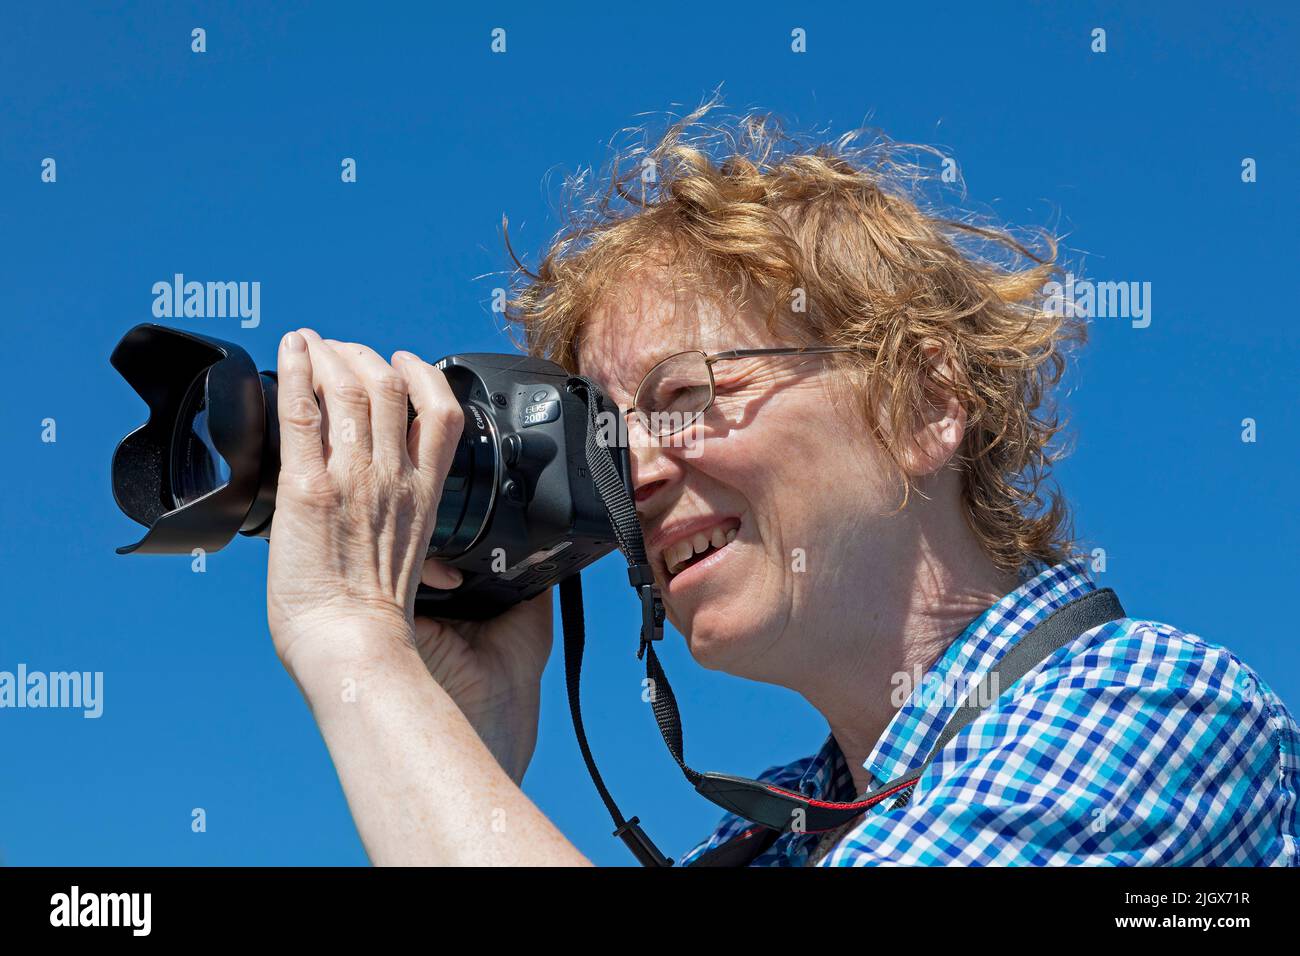 Woman taking photos, Wustrow, Mecklenburg-West Pomerania, Germany Stock Photo